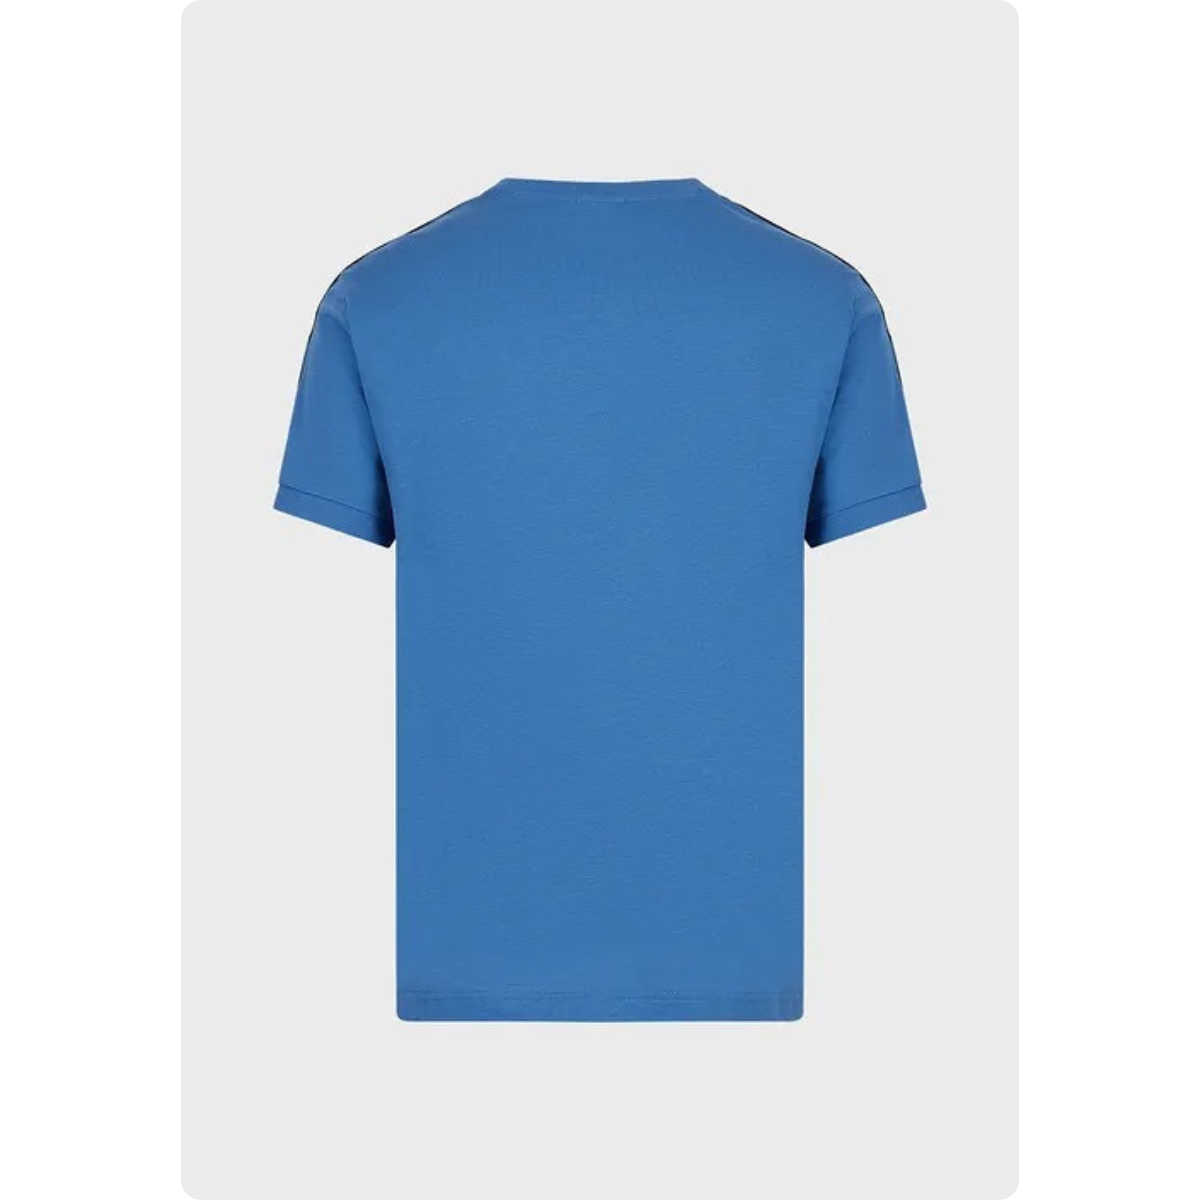 EA7 Giorgio Armani - Man Jersey T-Shirt - Bright Cobalt